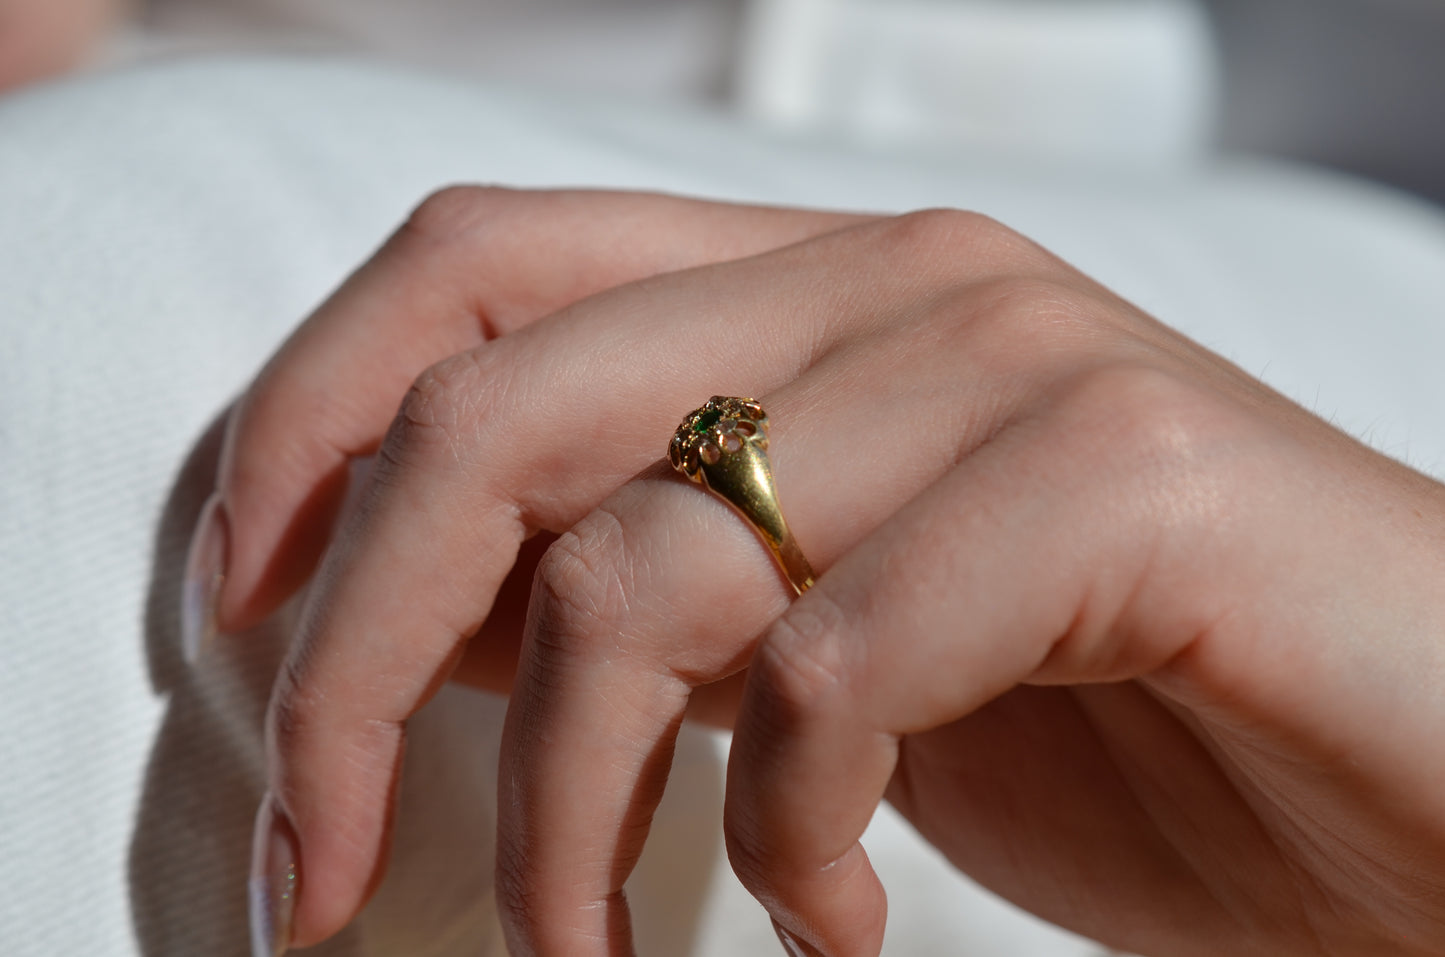 Vibrant Antique Paste and Diamond Halo Ring